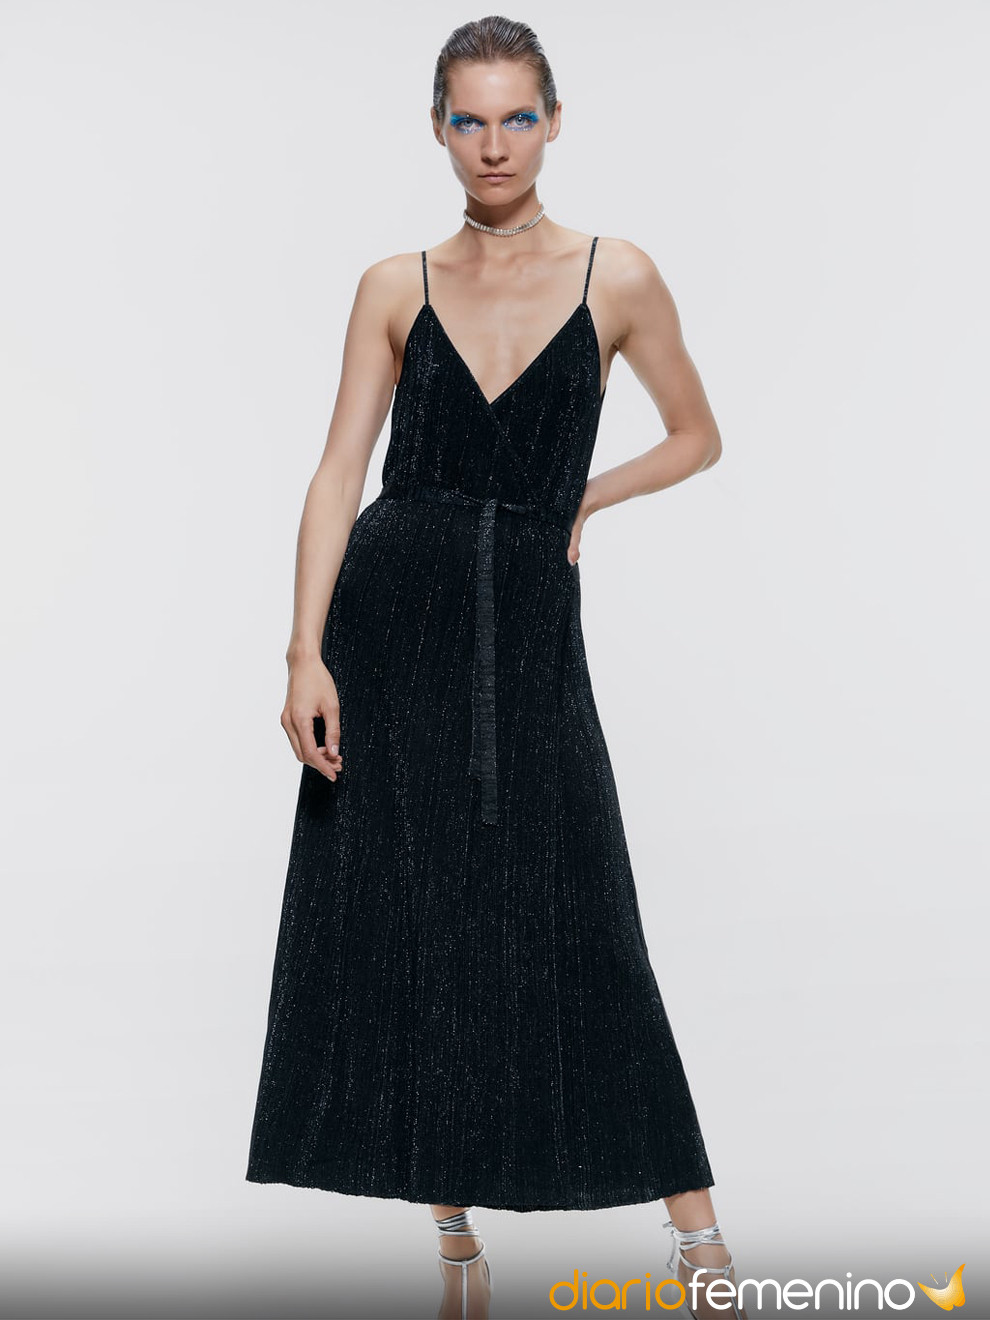 Vestido de glitter para Nochevieja 2019-2020 de Zara